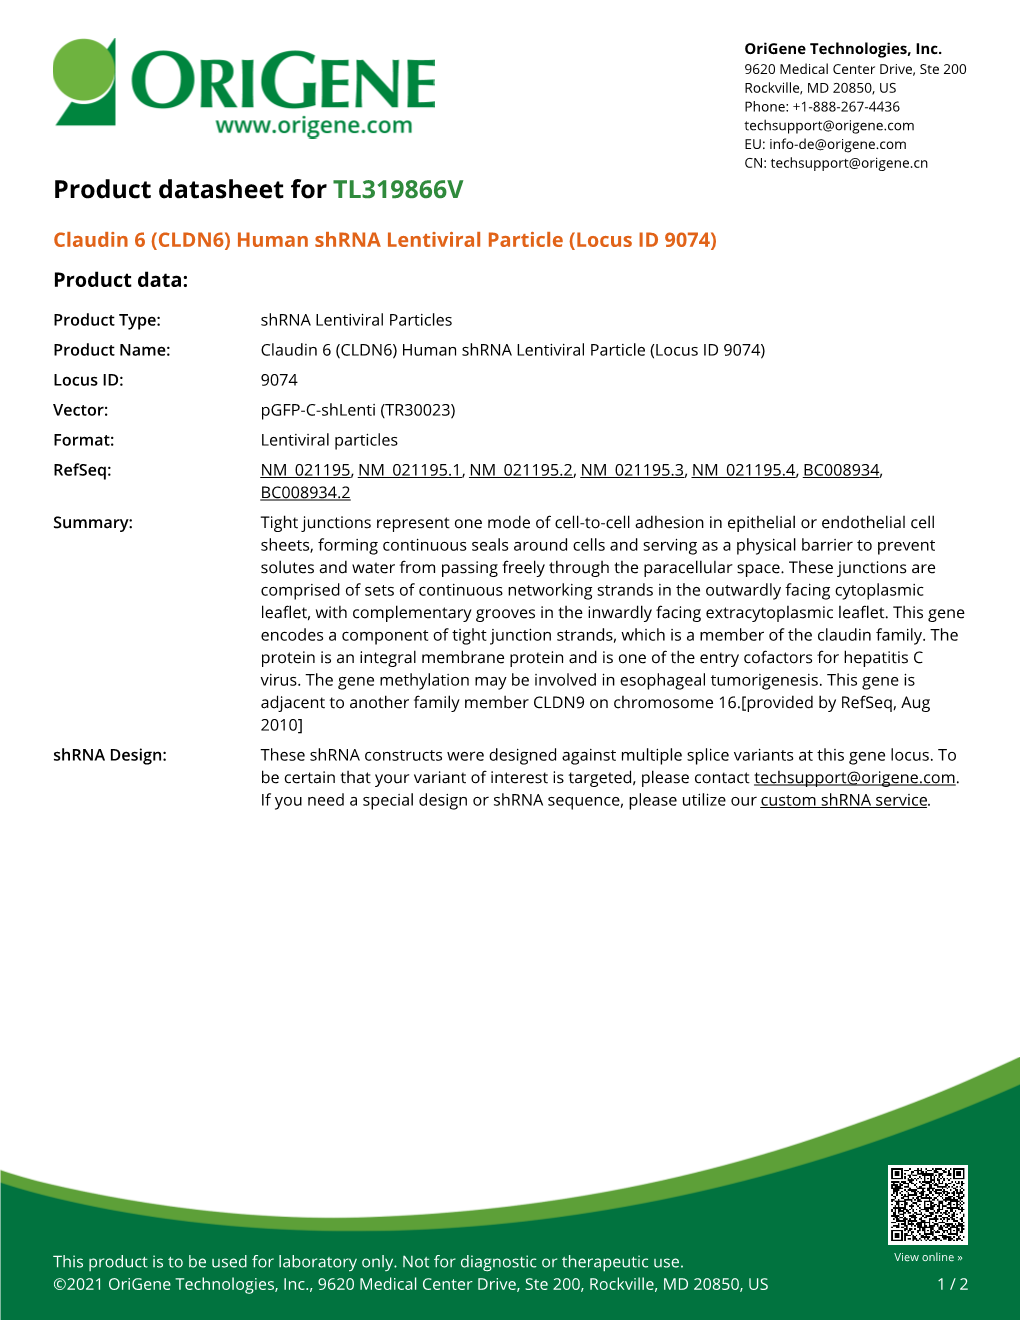 Claudin 6 (CLDN6) Human Shrna Lentiviral Particle (Locus ID 9074) Product Data